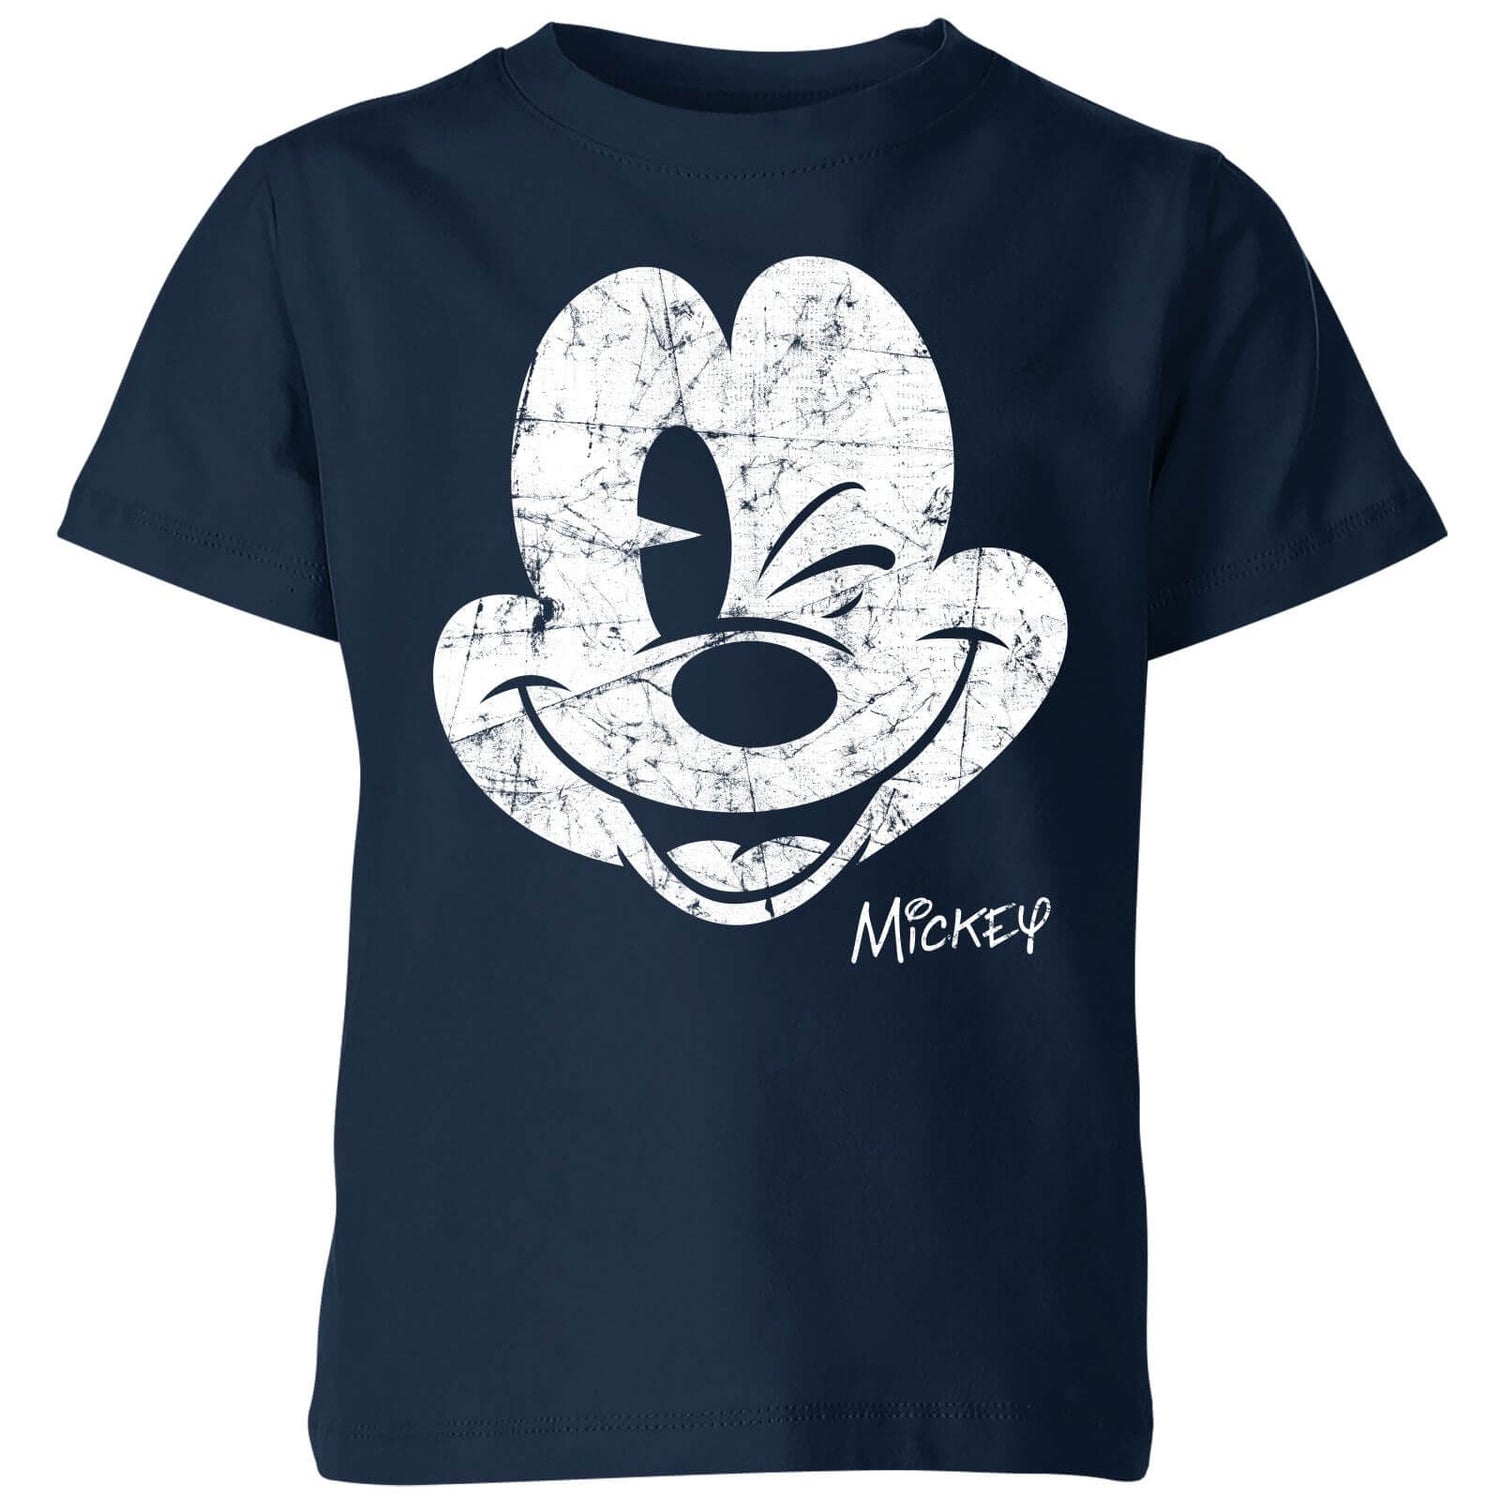 Disney Mickey Mouse Worn Face Kids' T-Shirt - Navy